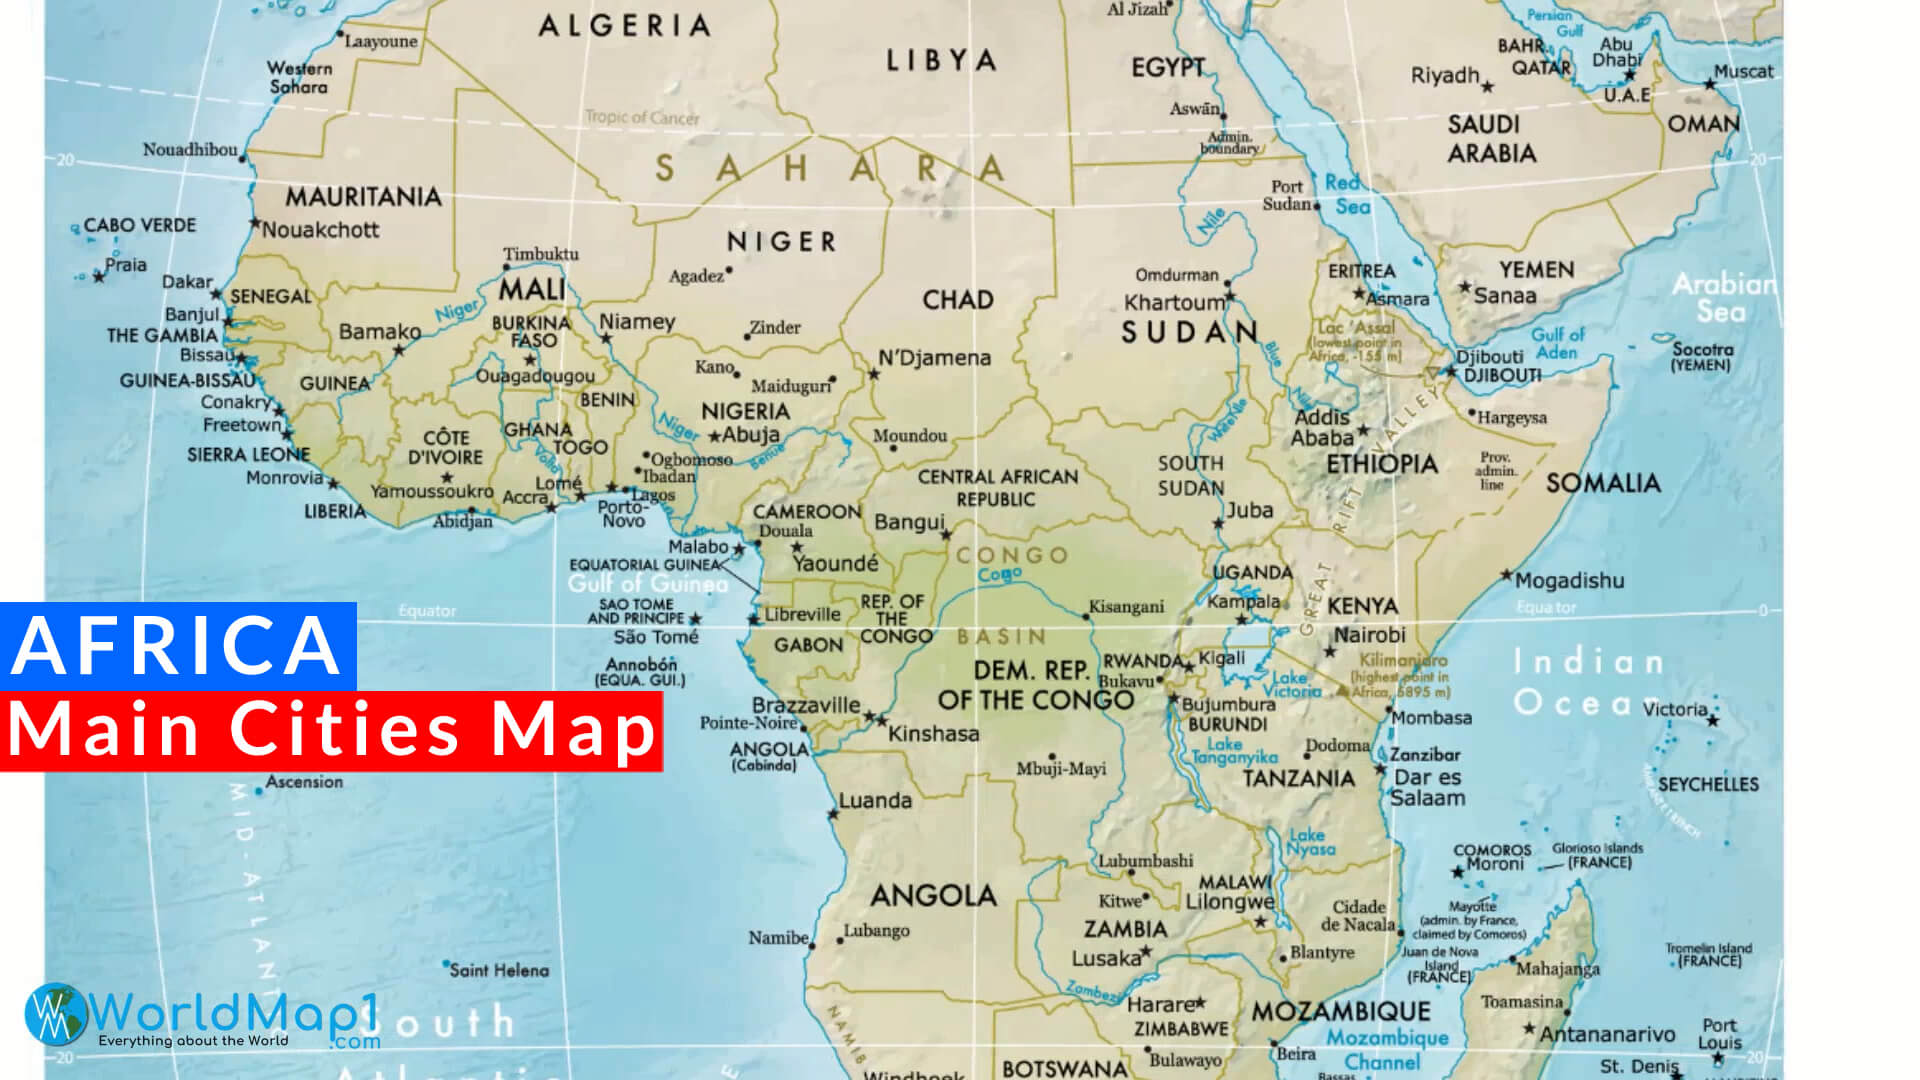 Africa Main Cities Map